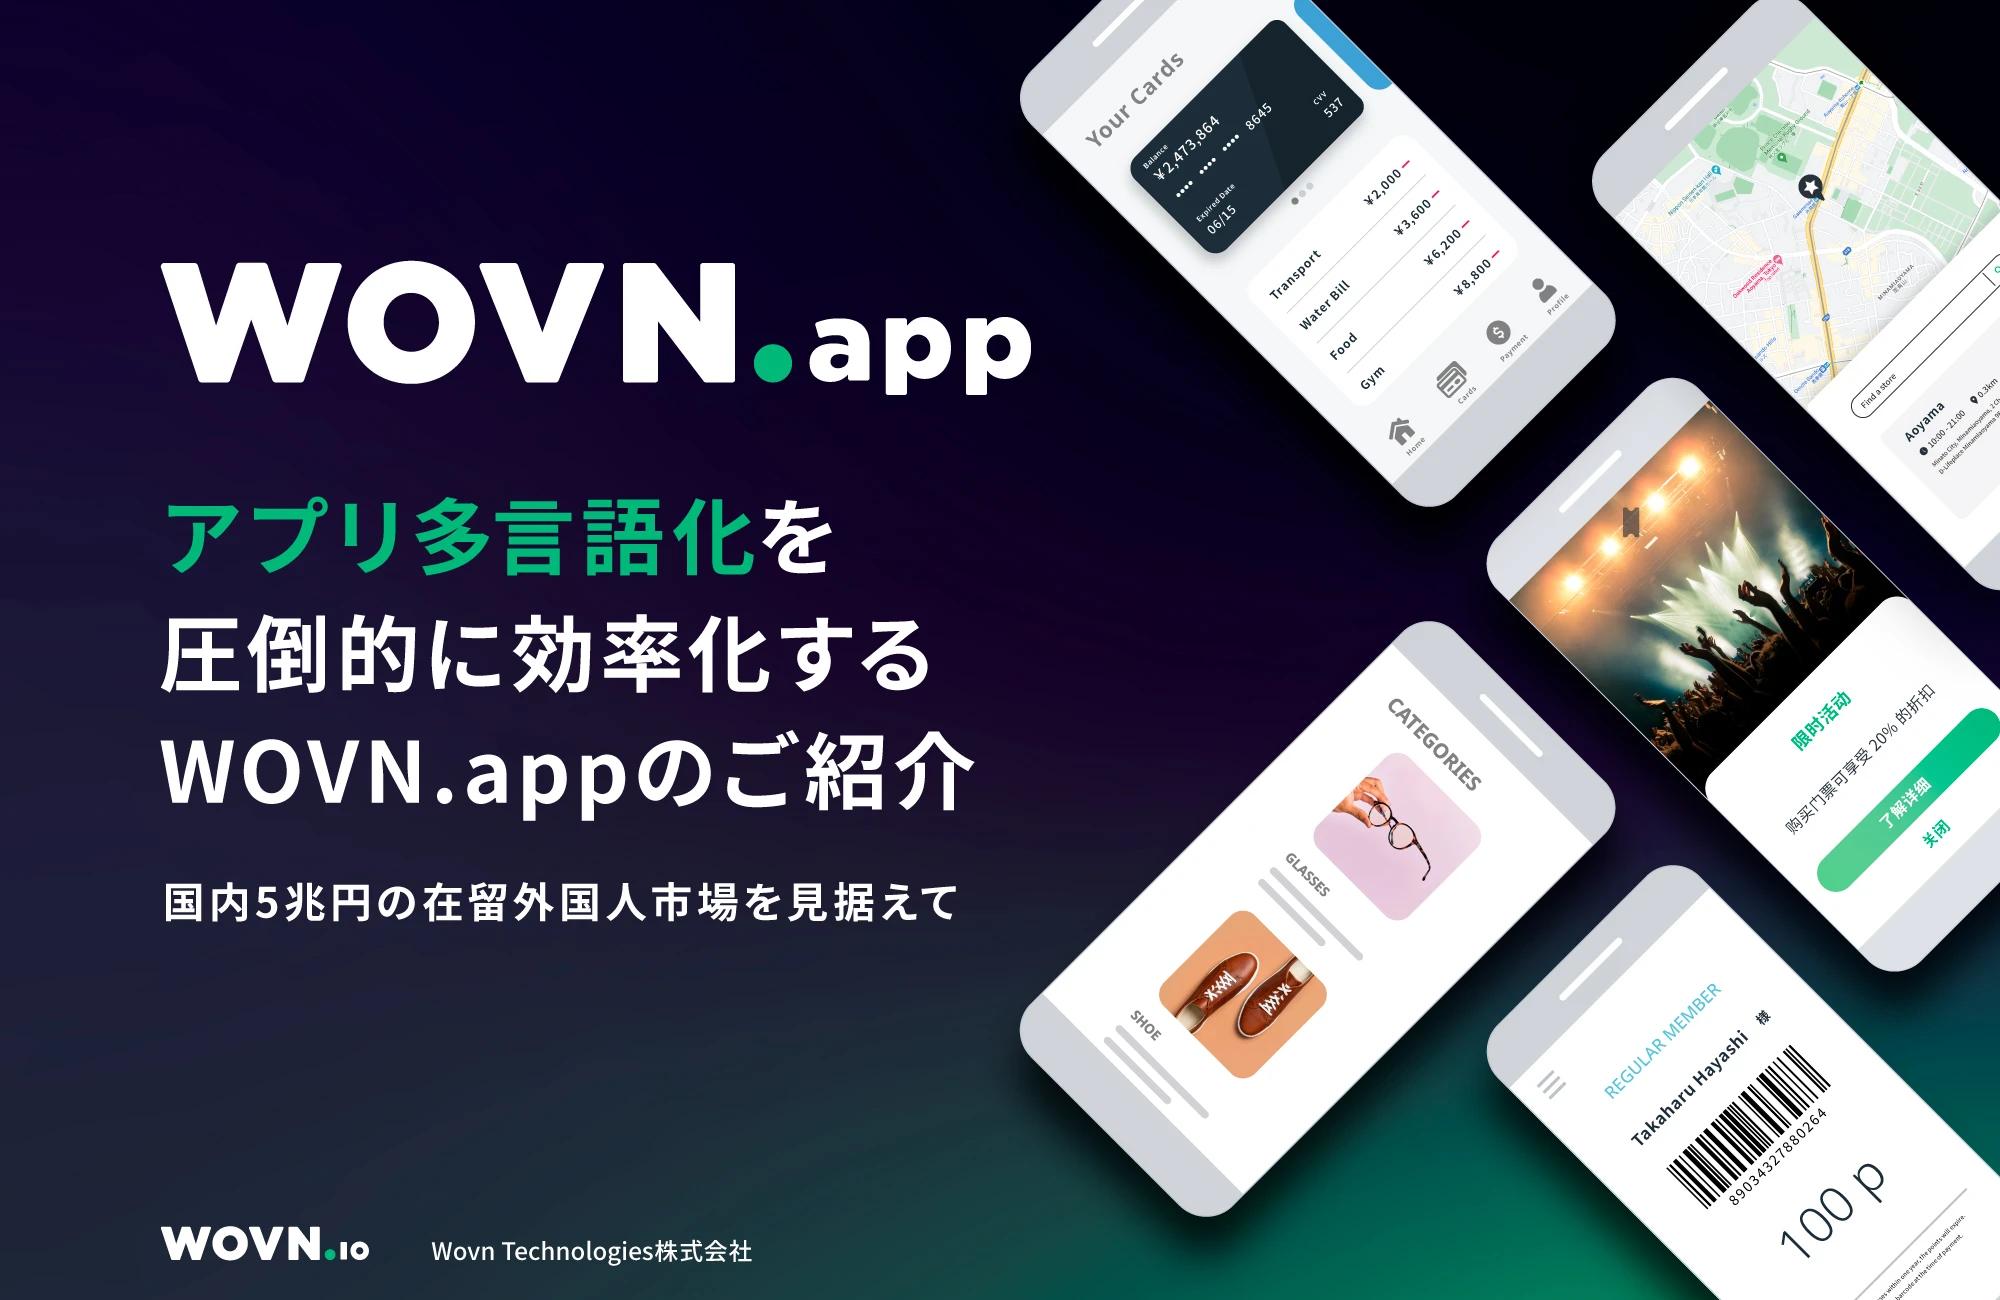 A00-wovn-app-full-COVER-1000x600